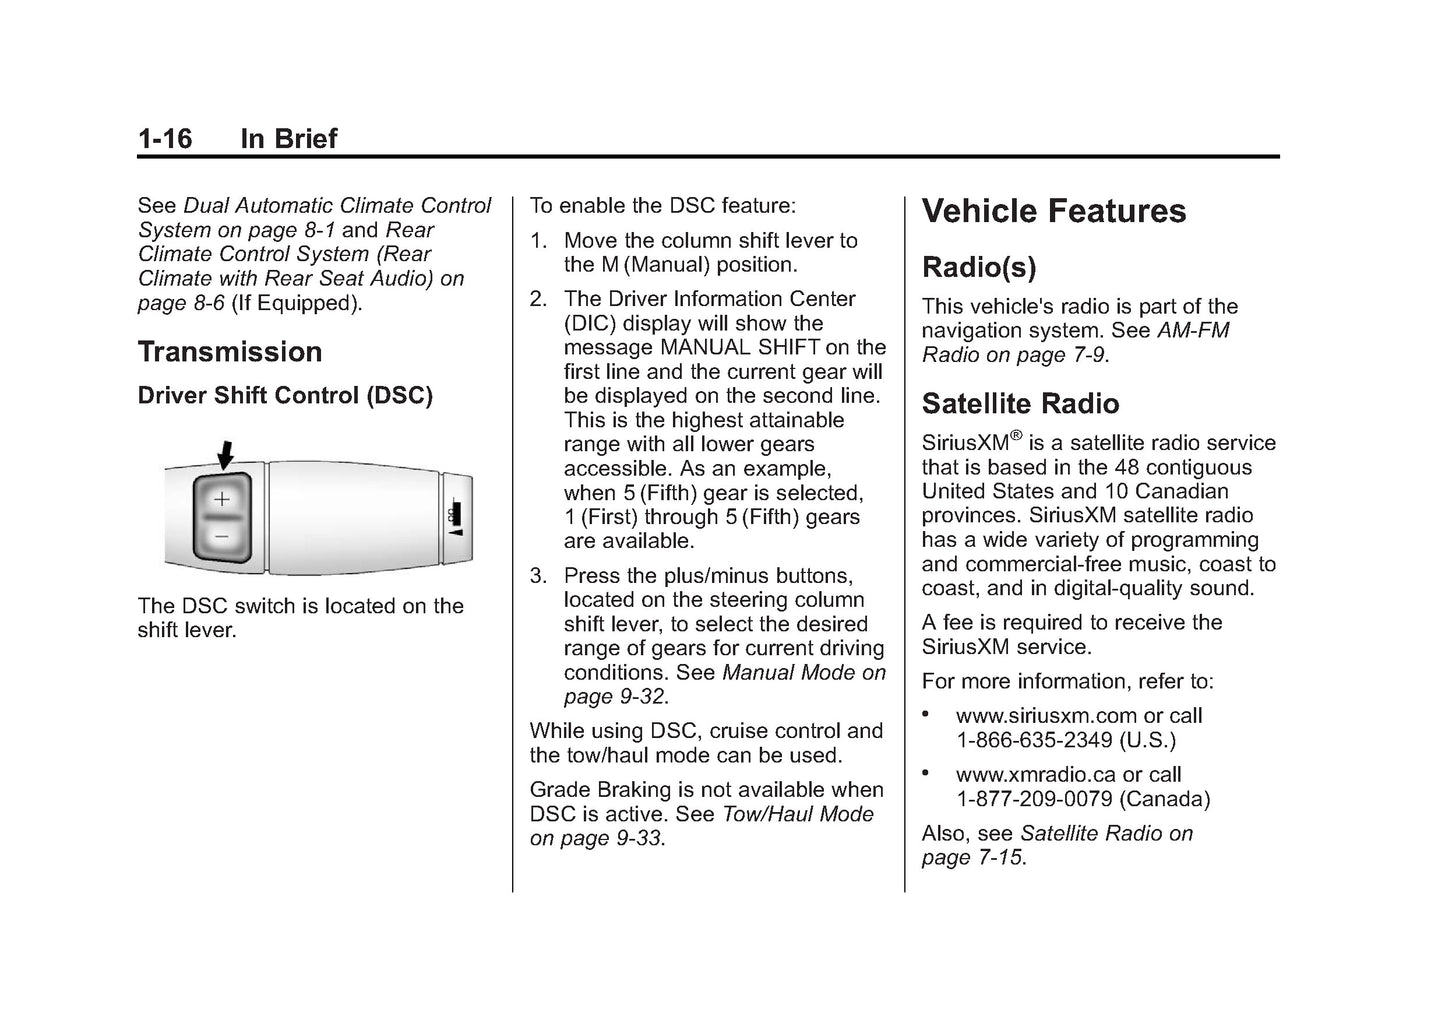 2013 Cadillac Escalade / ESV Owner's Manual | English